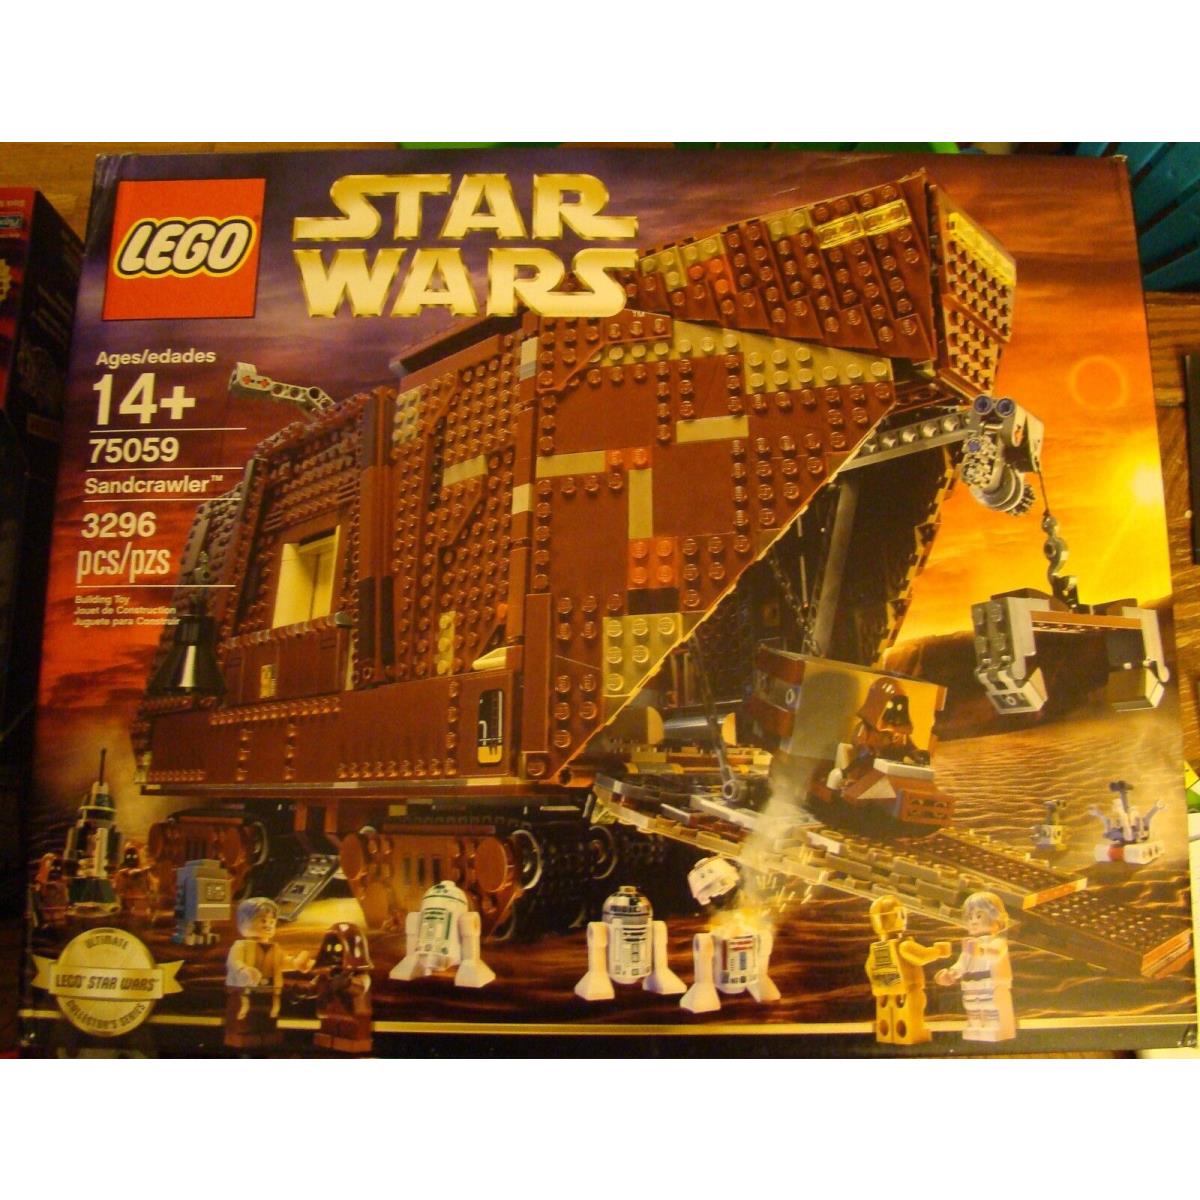 Star Wars Lego 75059 Sand Crawler Sandcrawler Set